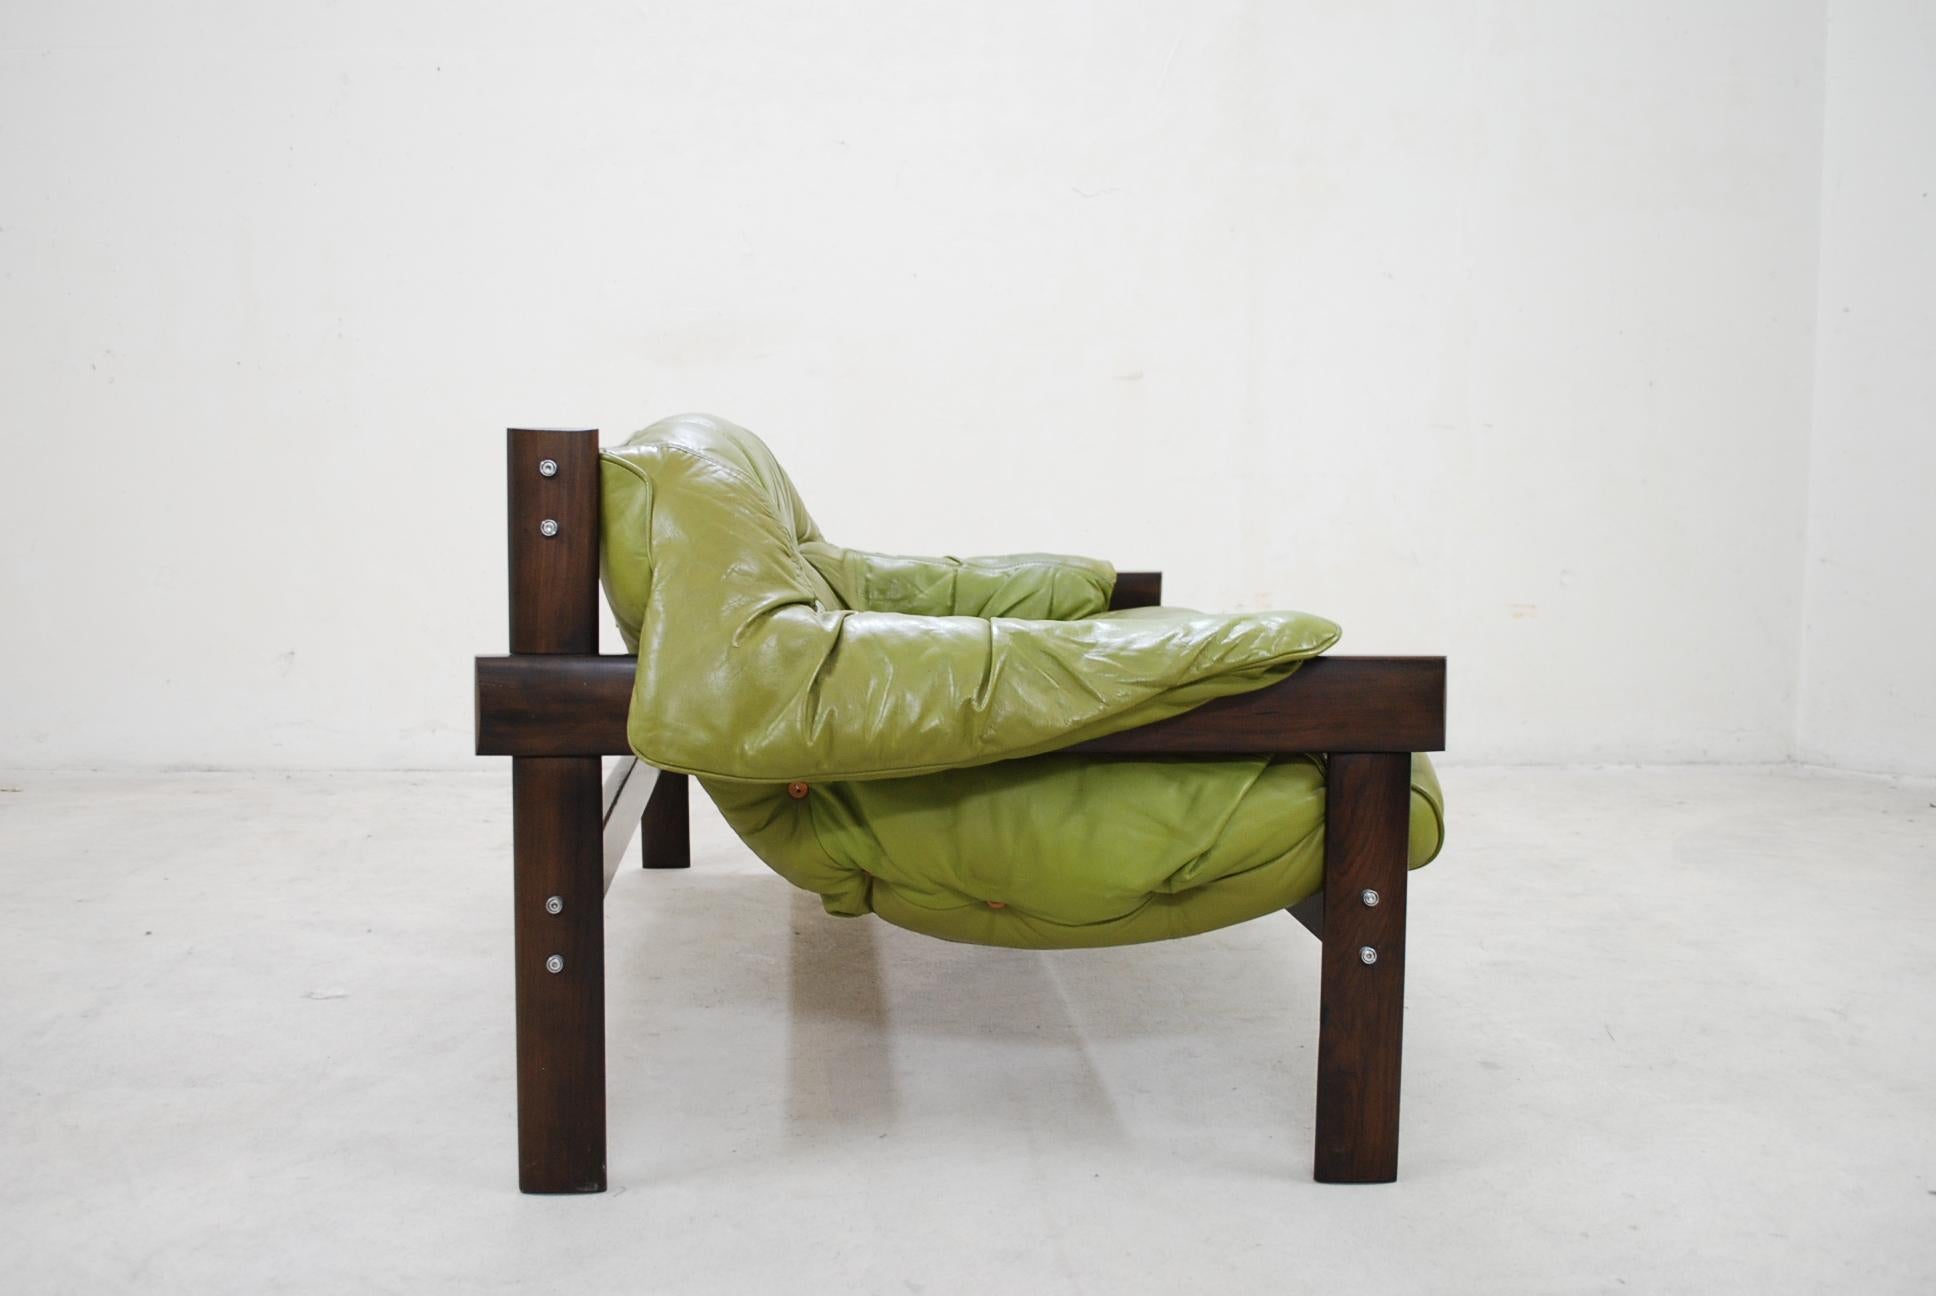 Wood Percival Lafer MP 041 Leather Sofa